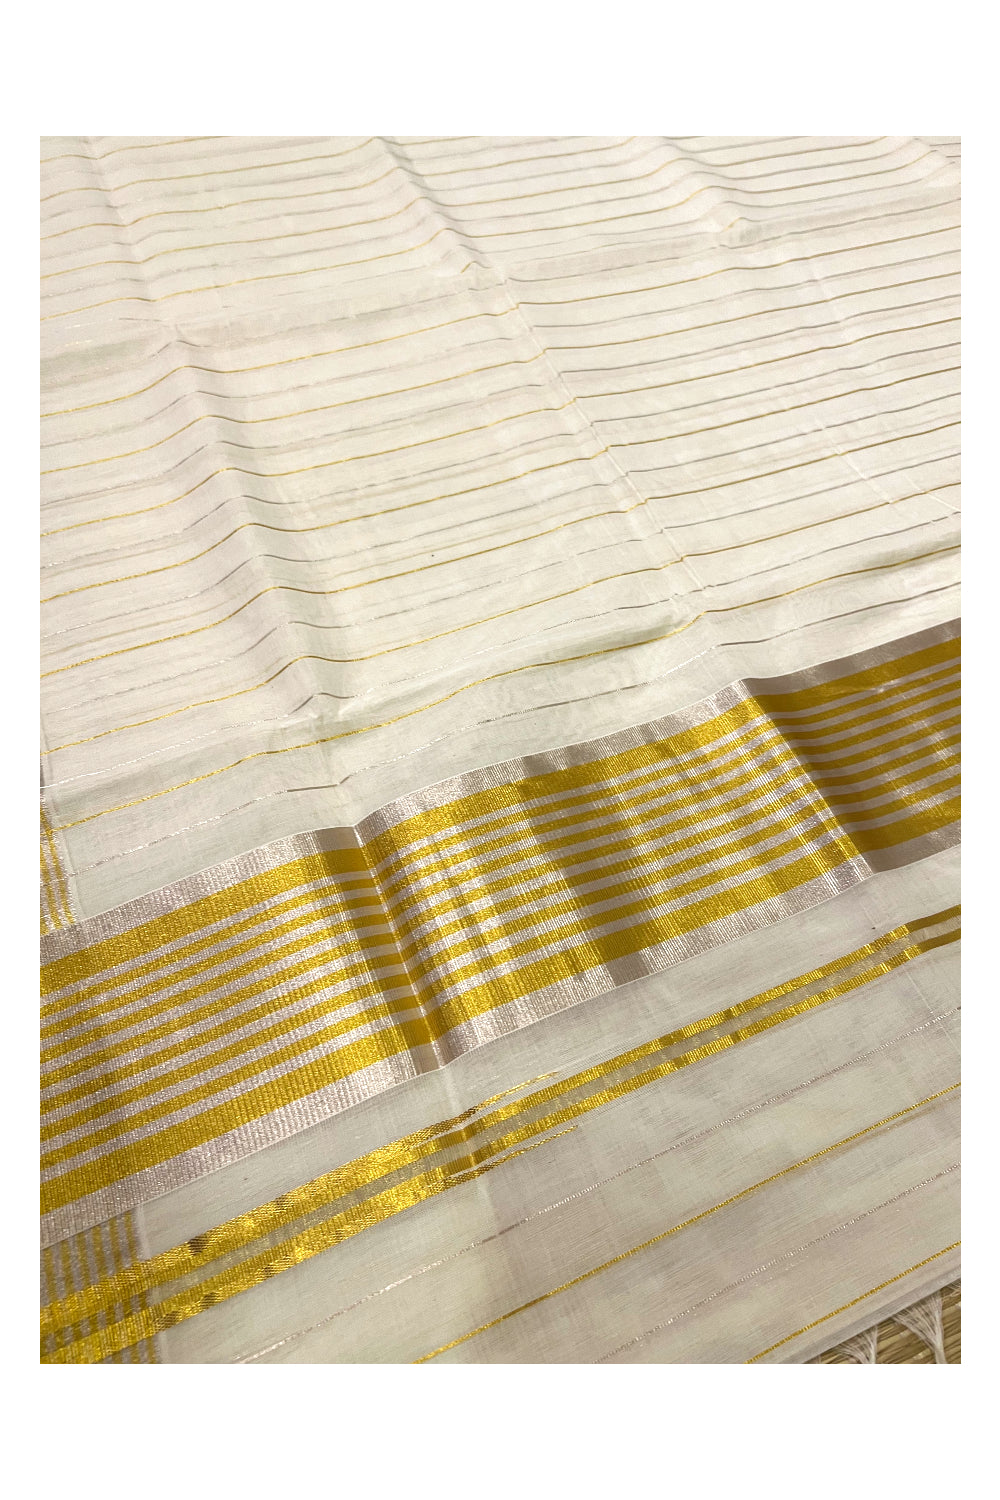 Southloom™ Premium Handloom Kasavu Saree with Silver and Golden Kasavu Lines Across Body